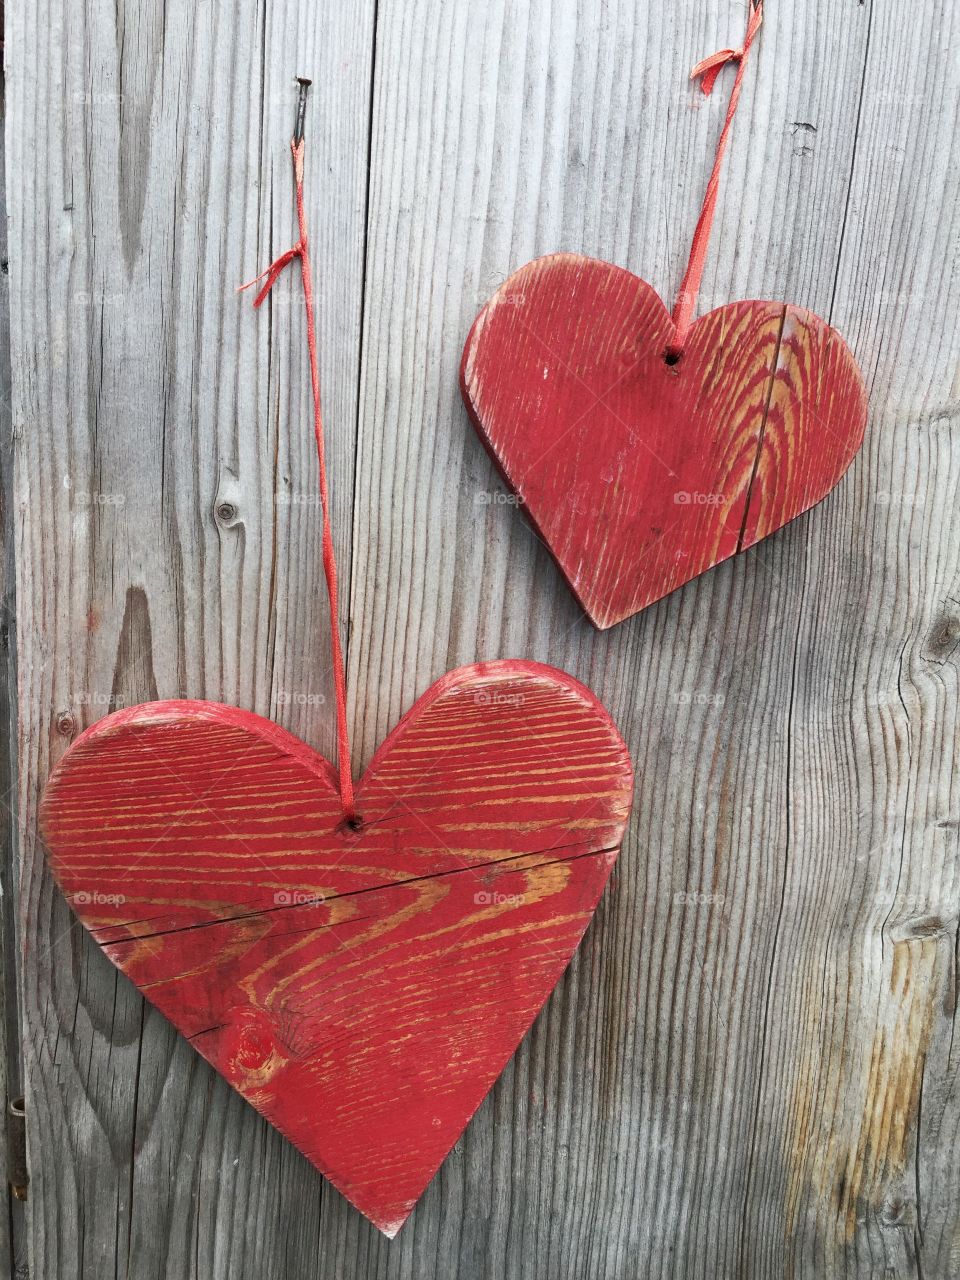 Heart shape on wooden background